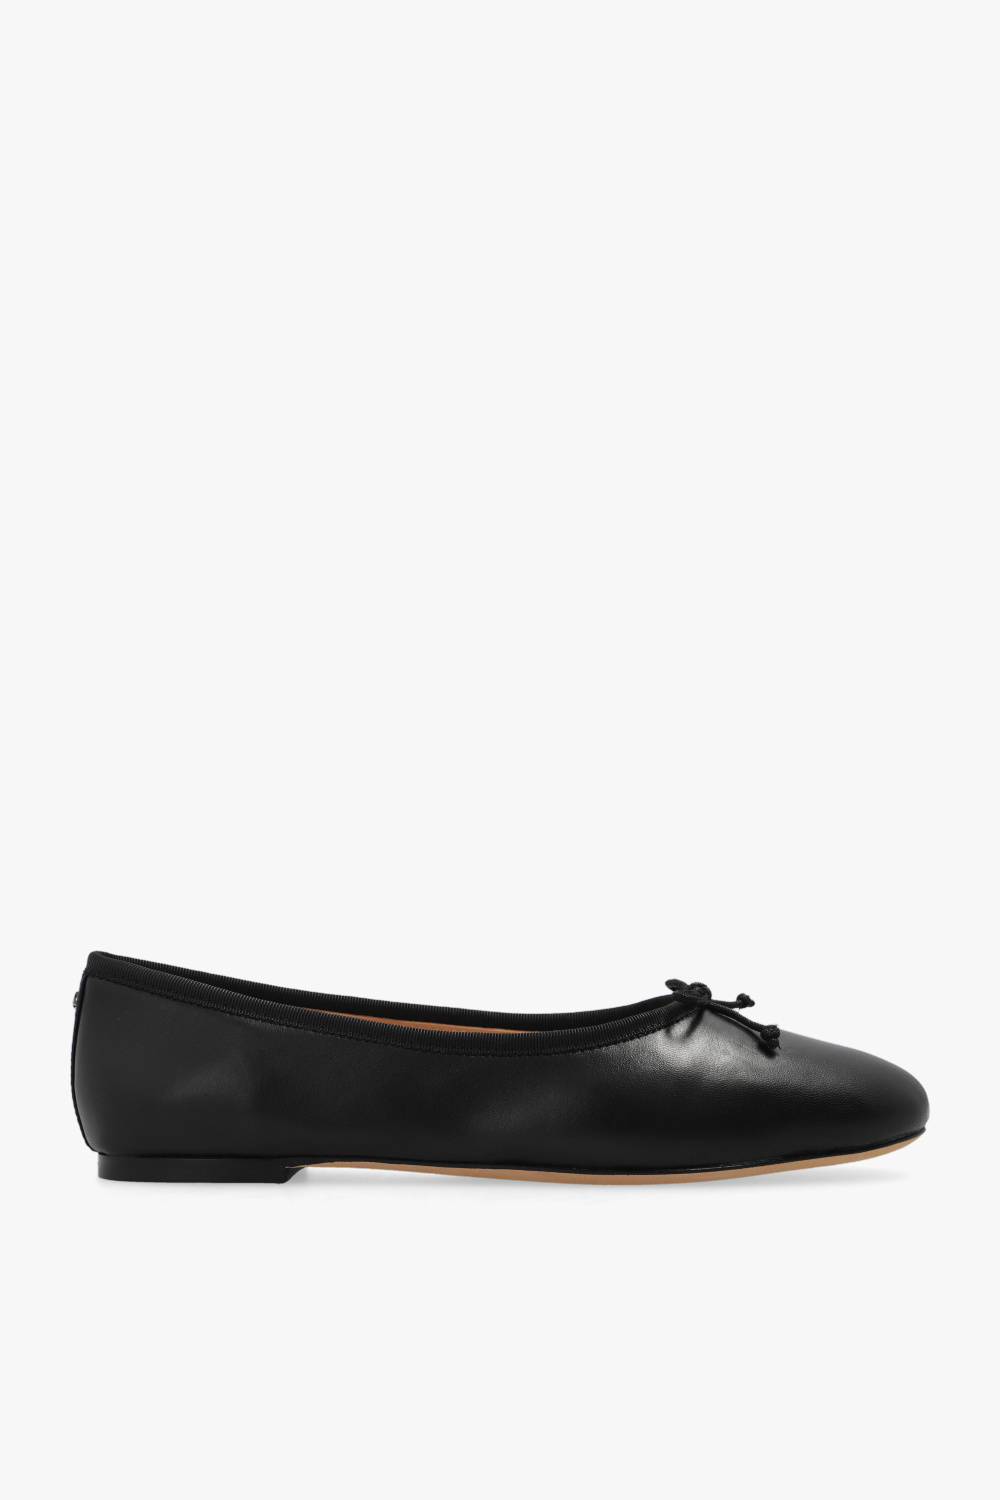 Kate Spade 'Honey' leather ballet flats | Women's Shoes | Vitkac